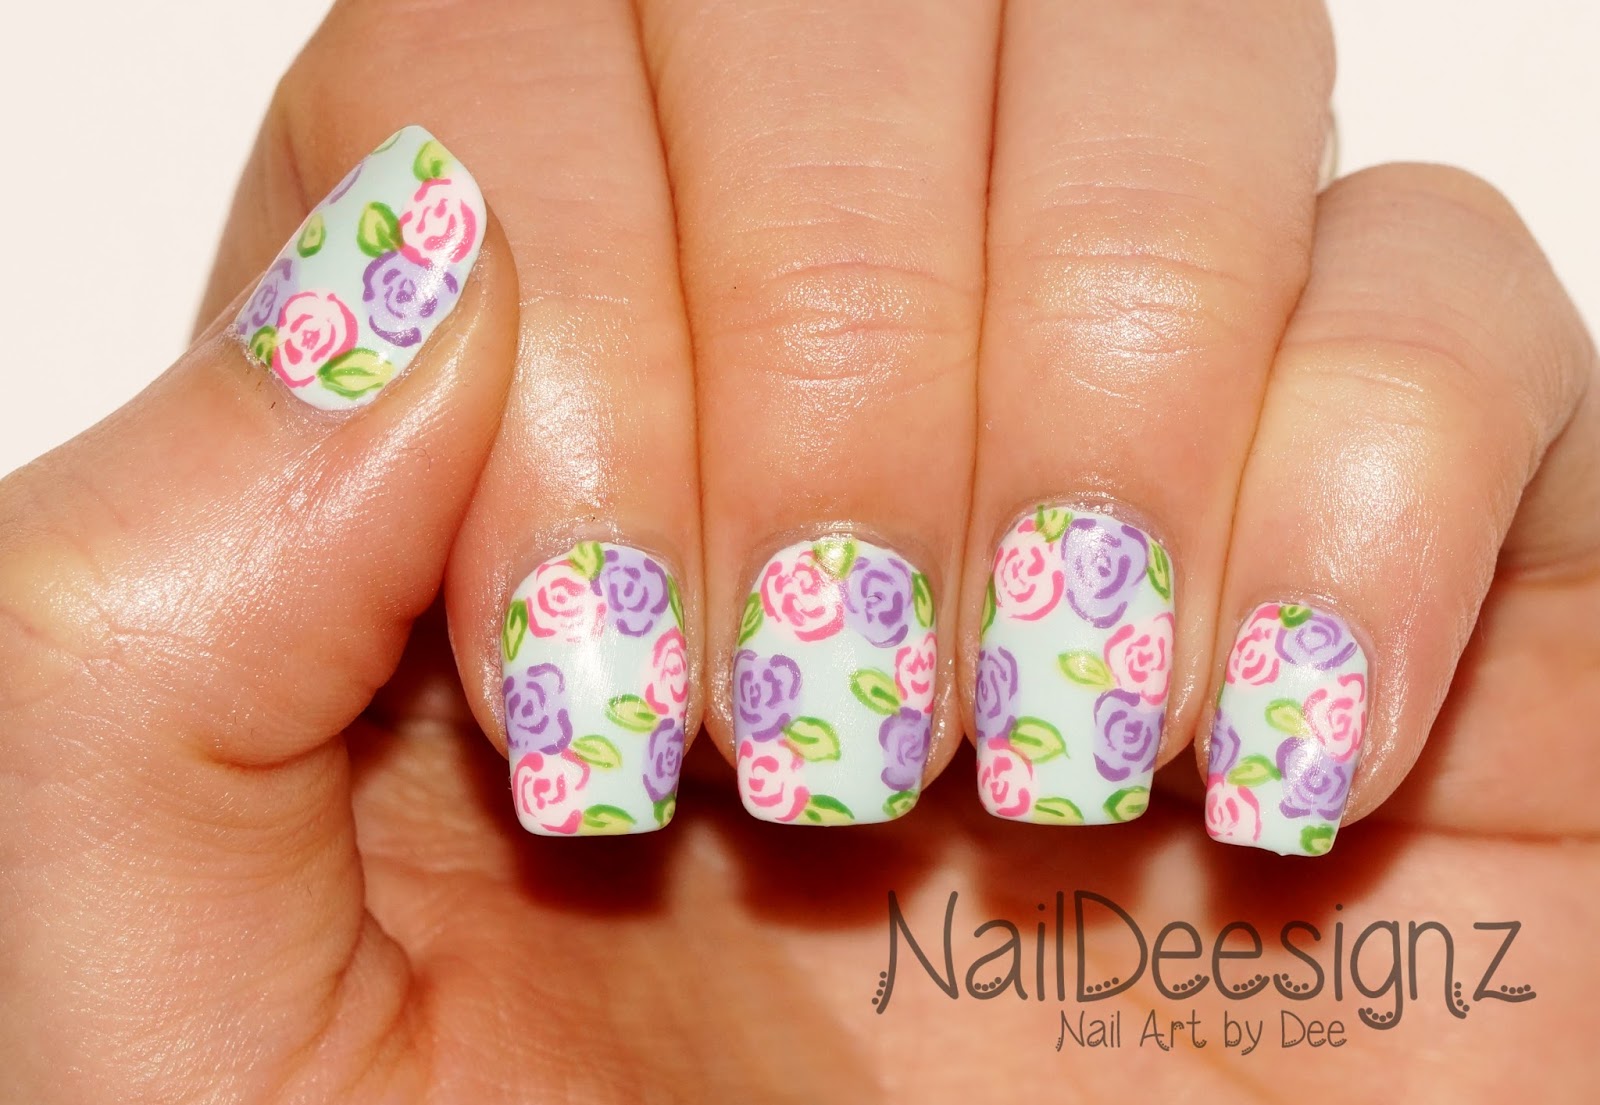 1. Floral Nail Art Designs - wide 3